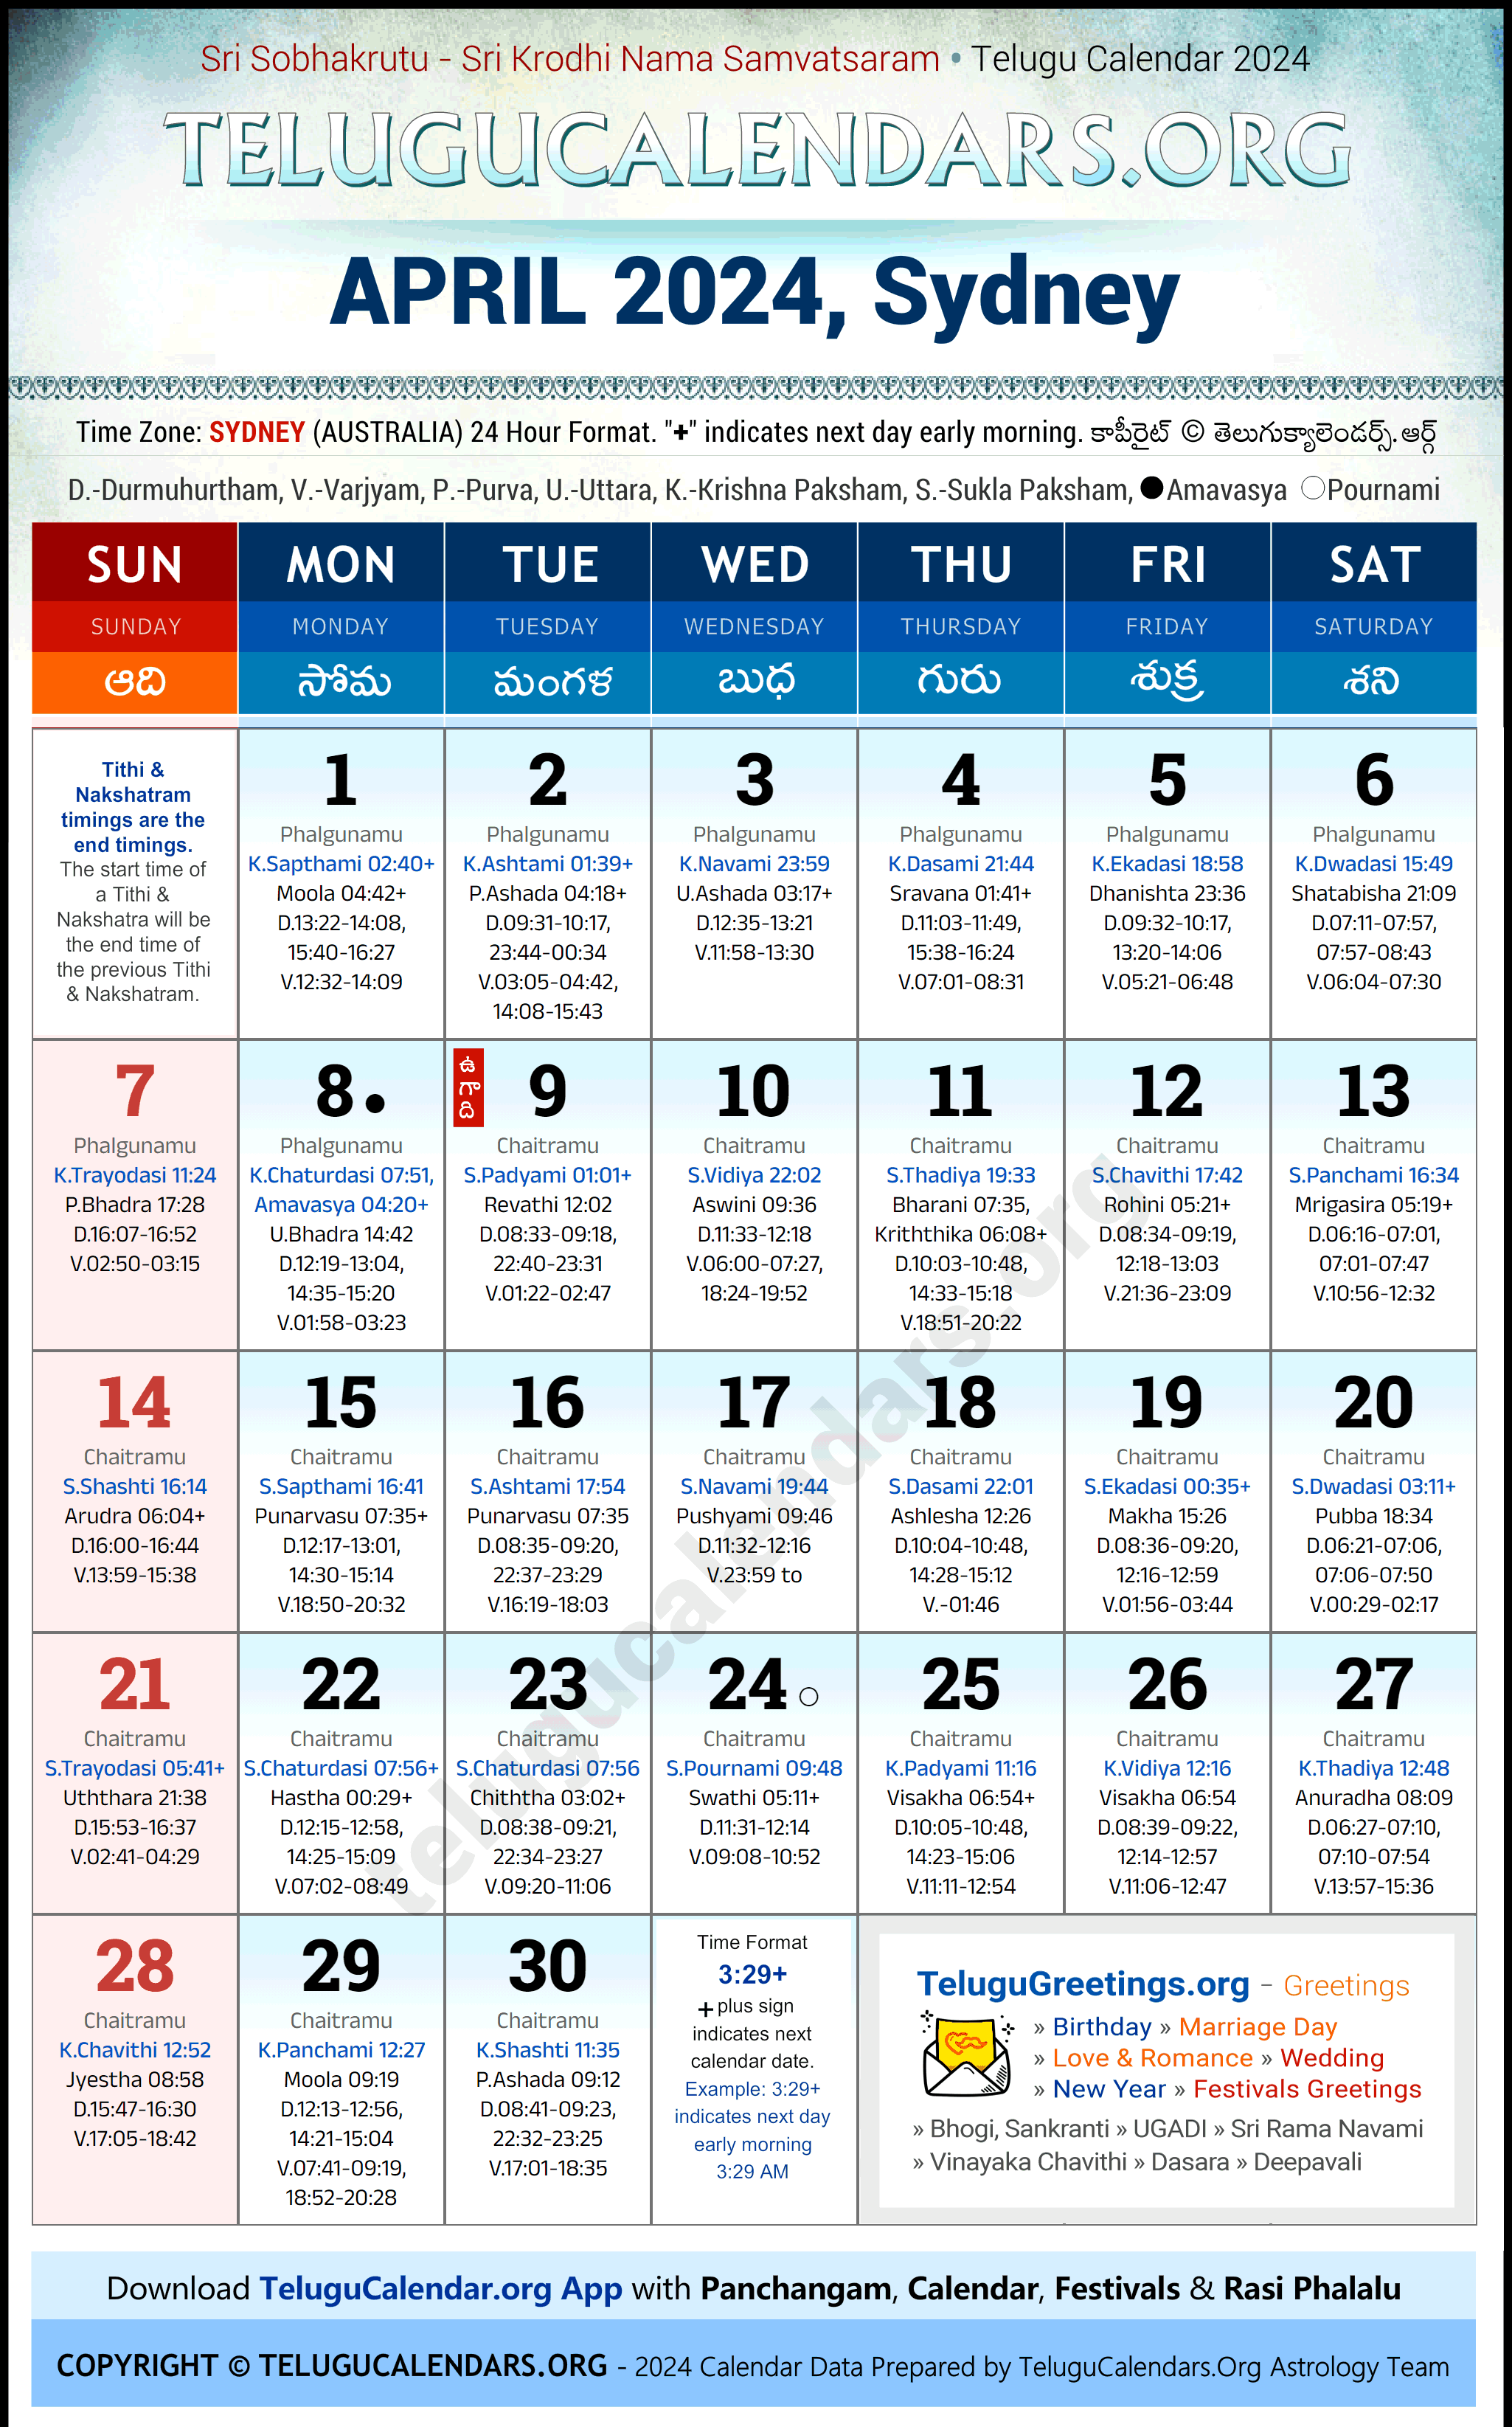 Telugu Calendar 2024 April Festivals for Sydney